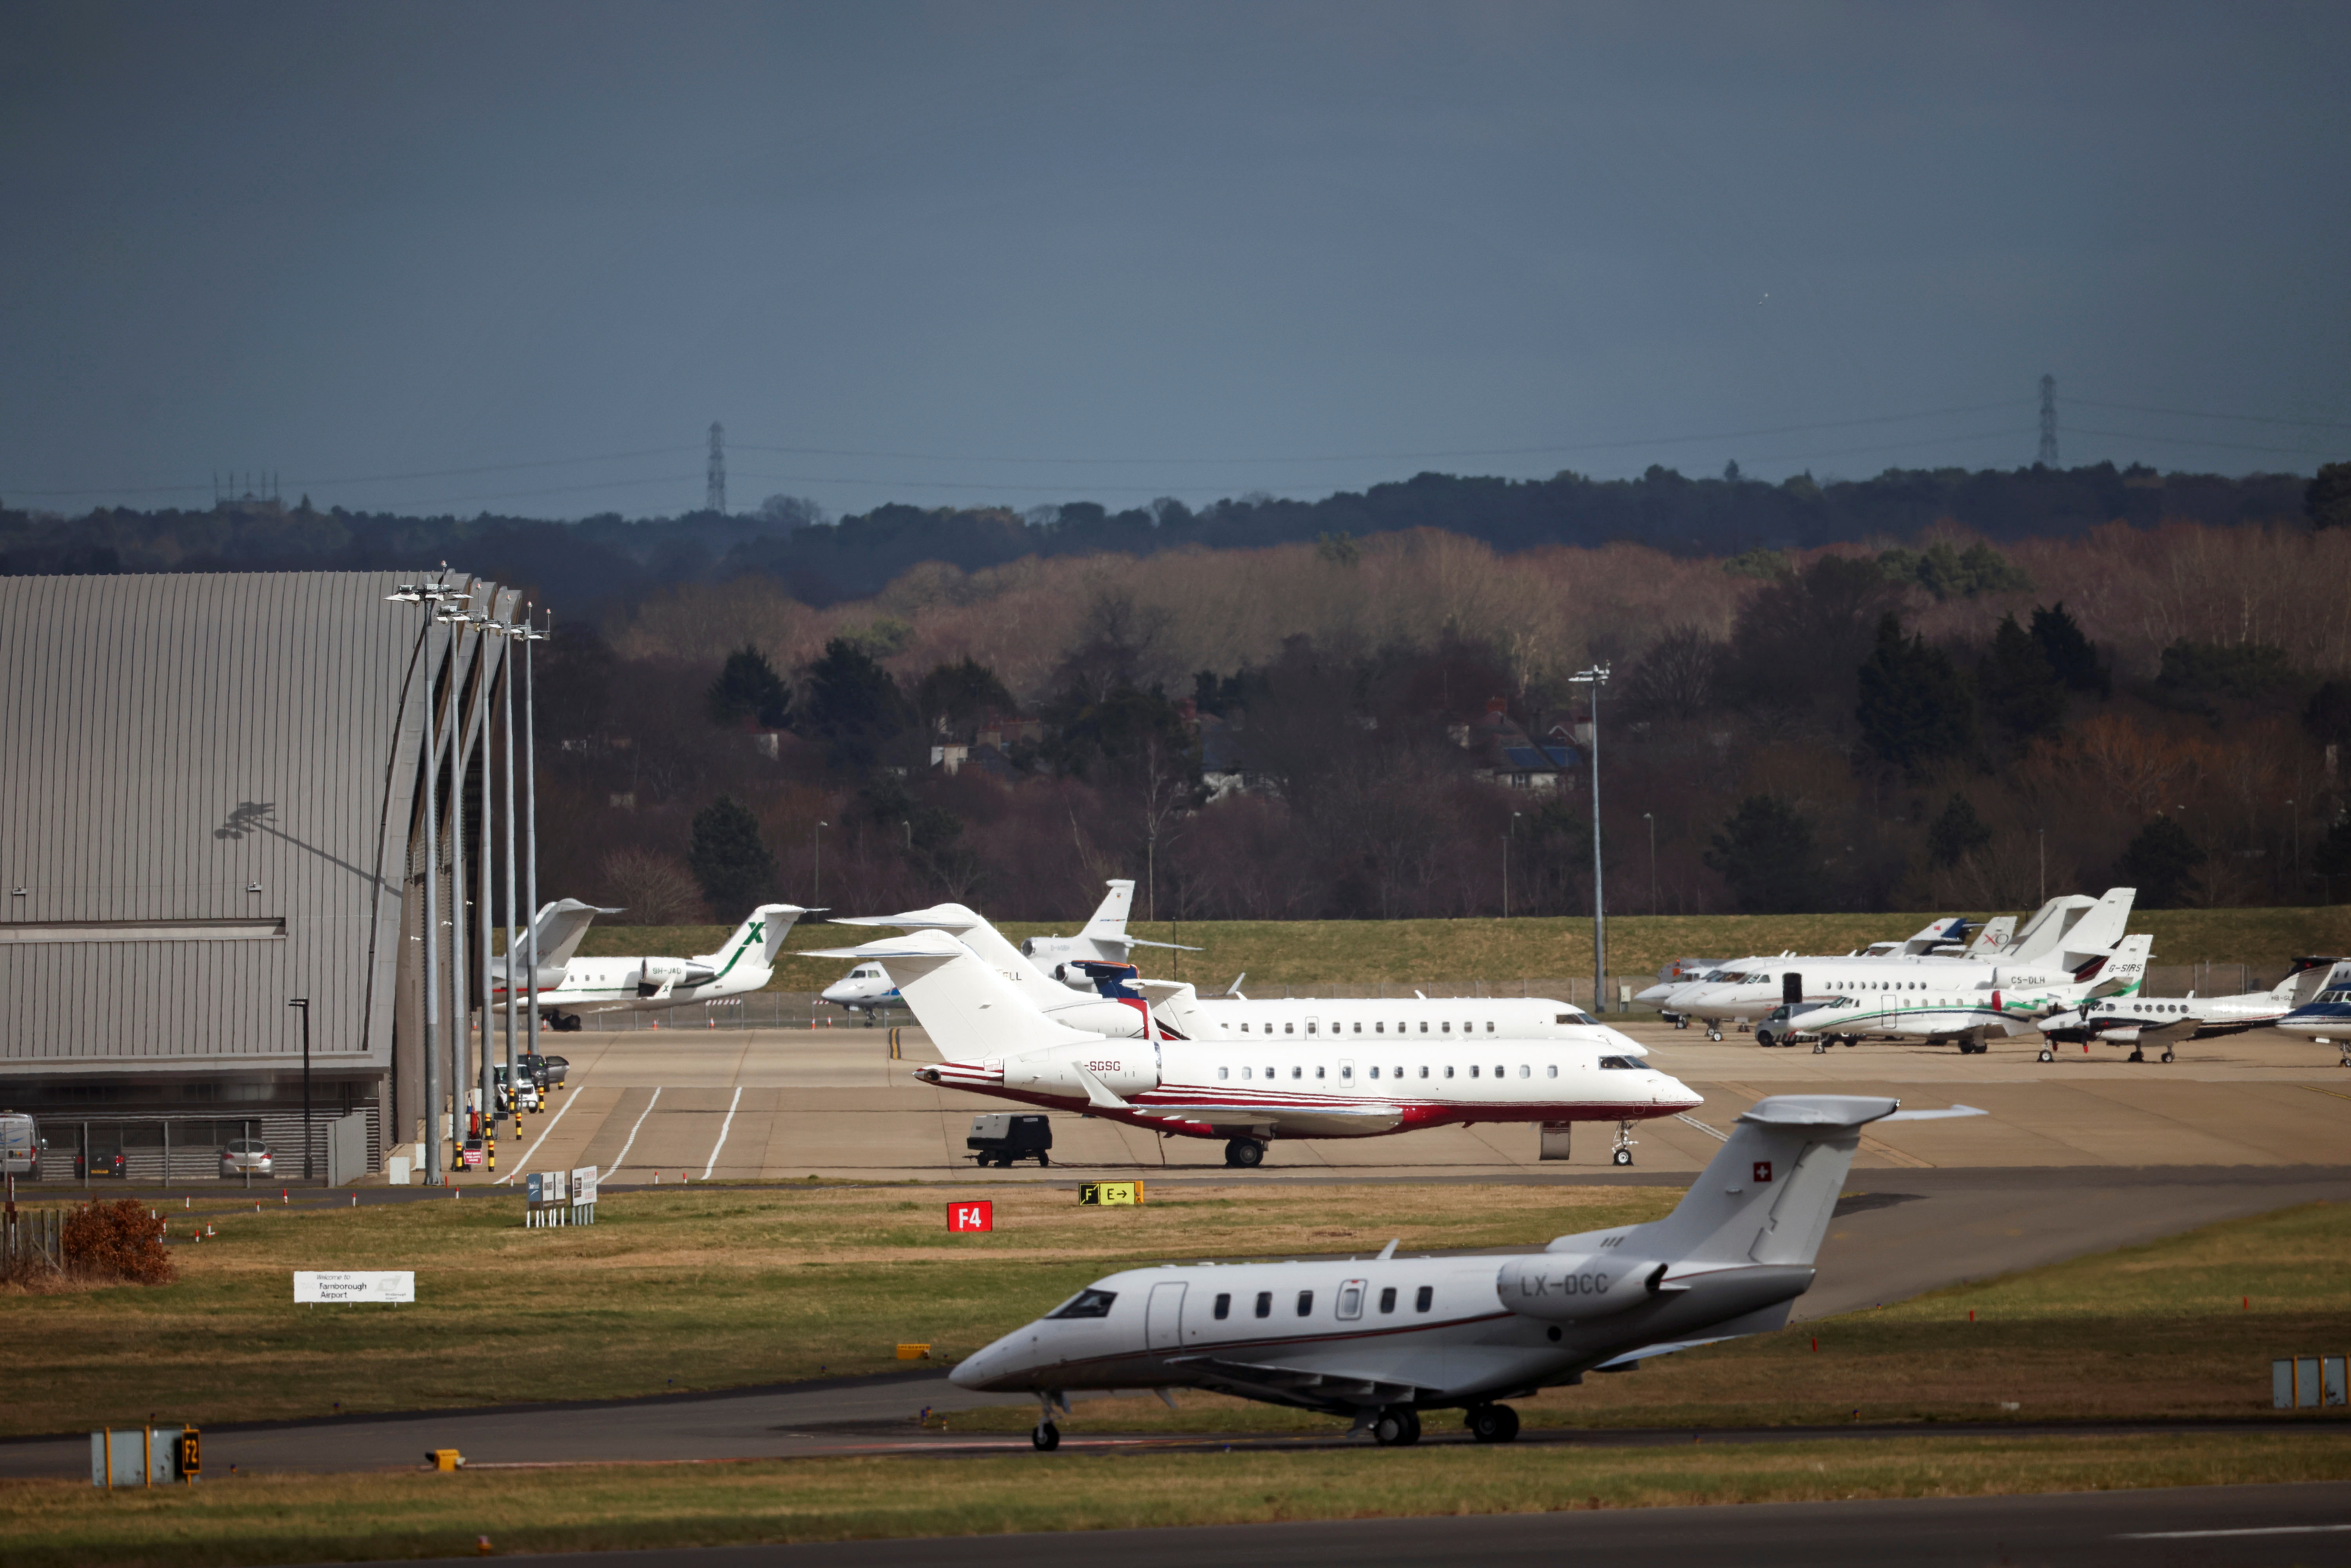 Planes on the tarmac at Farnborough Airport